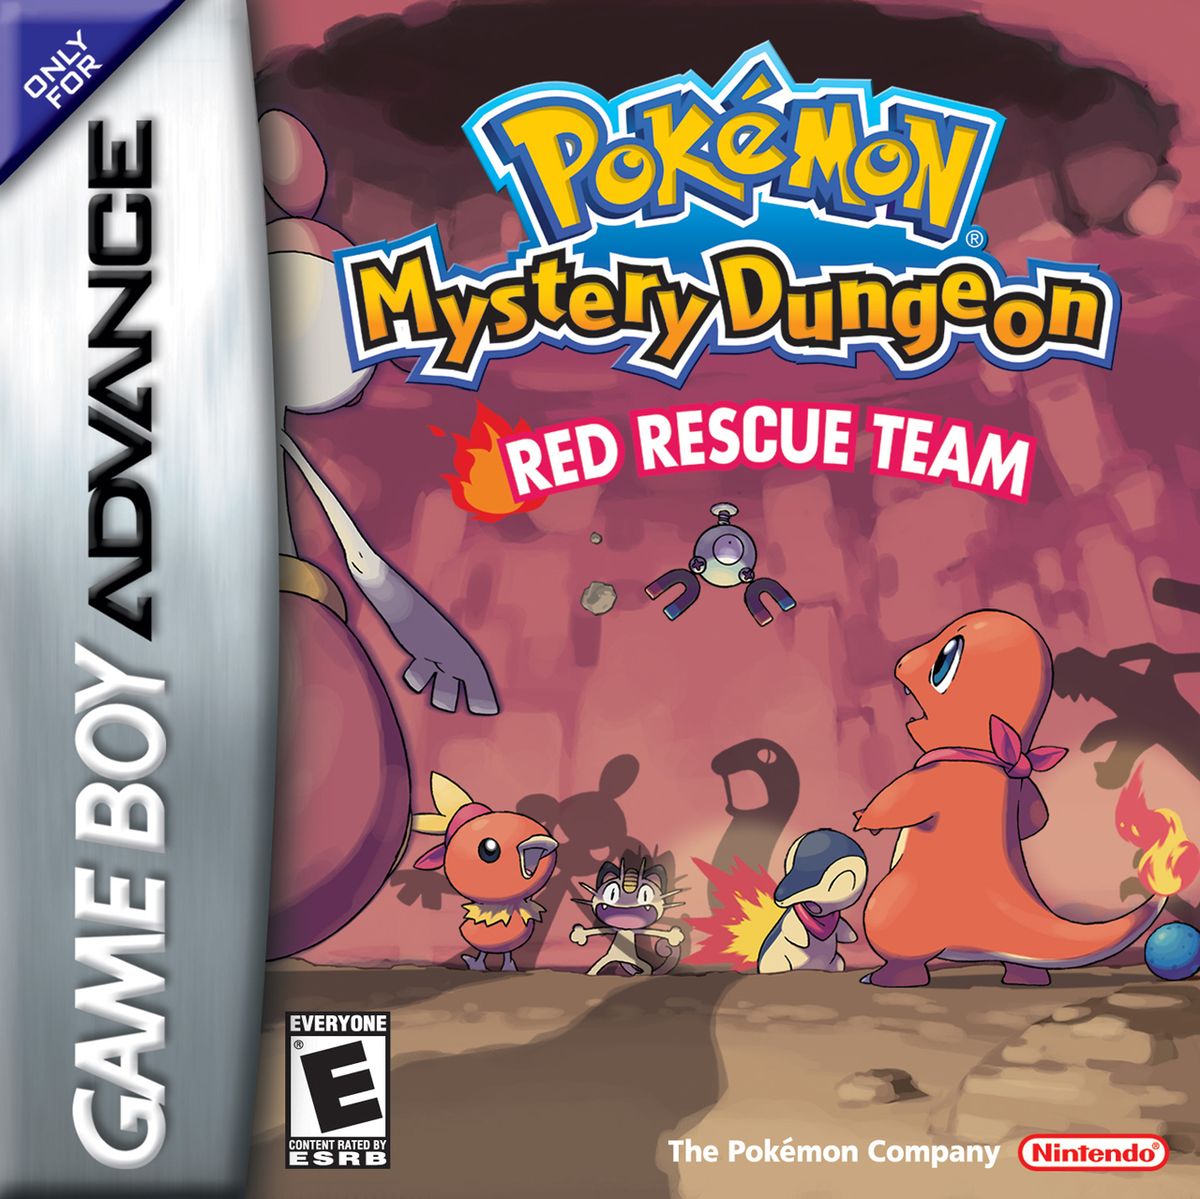 pokemon red team